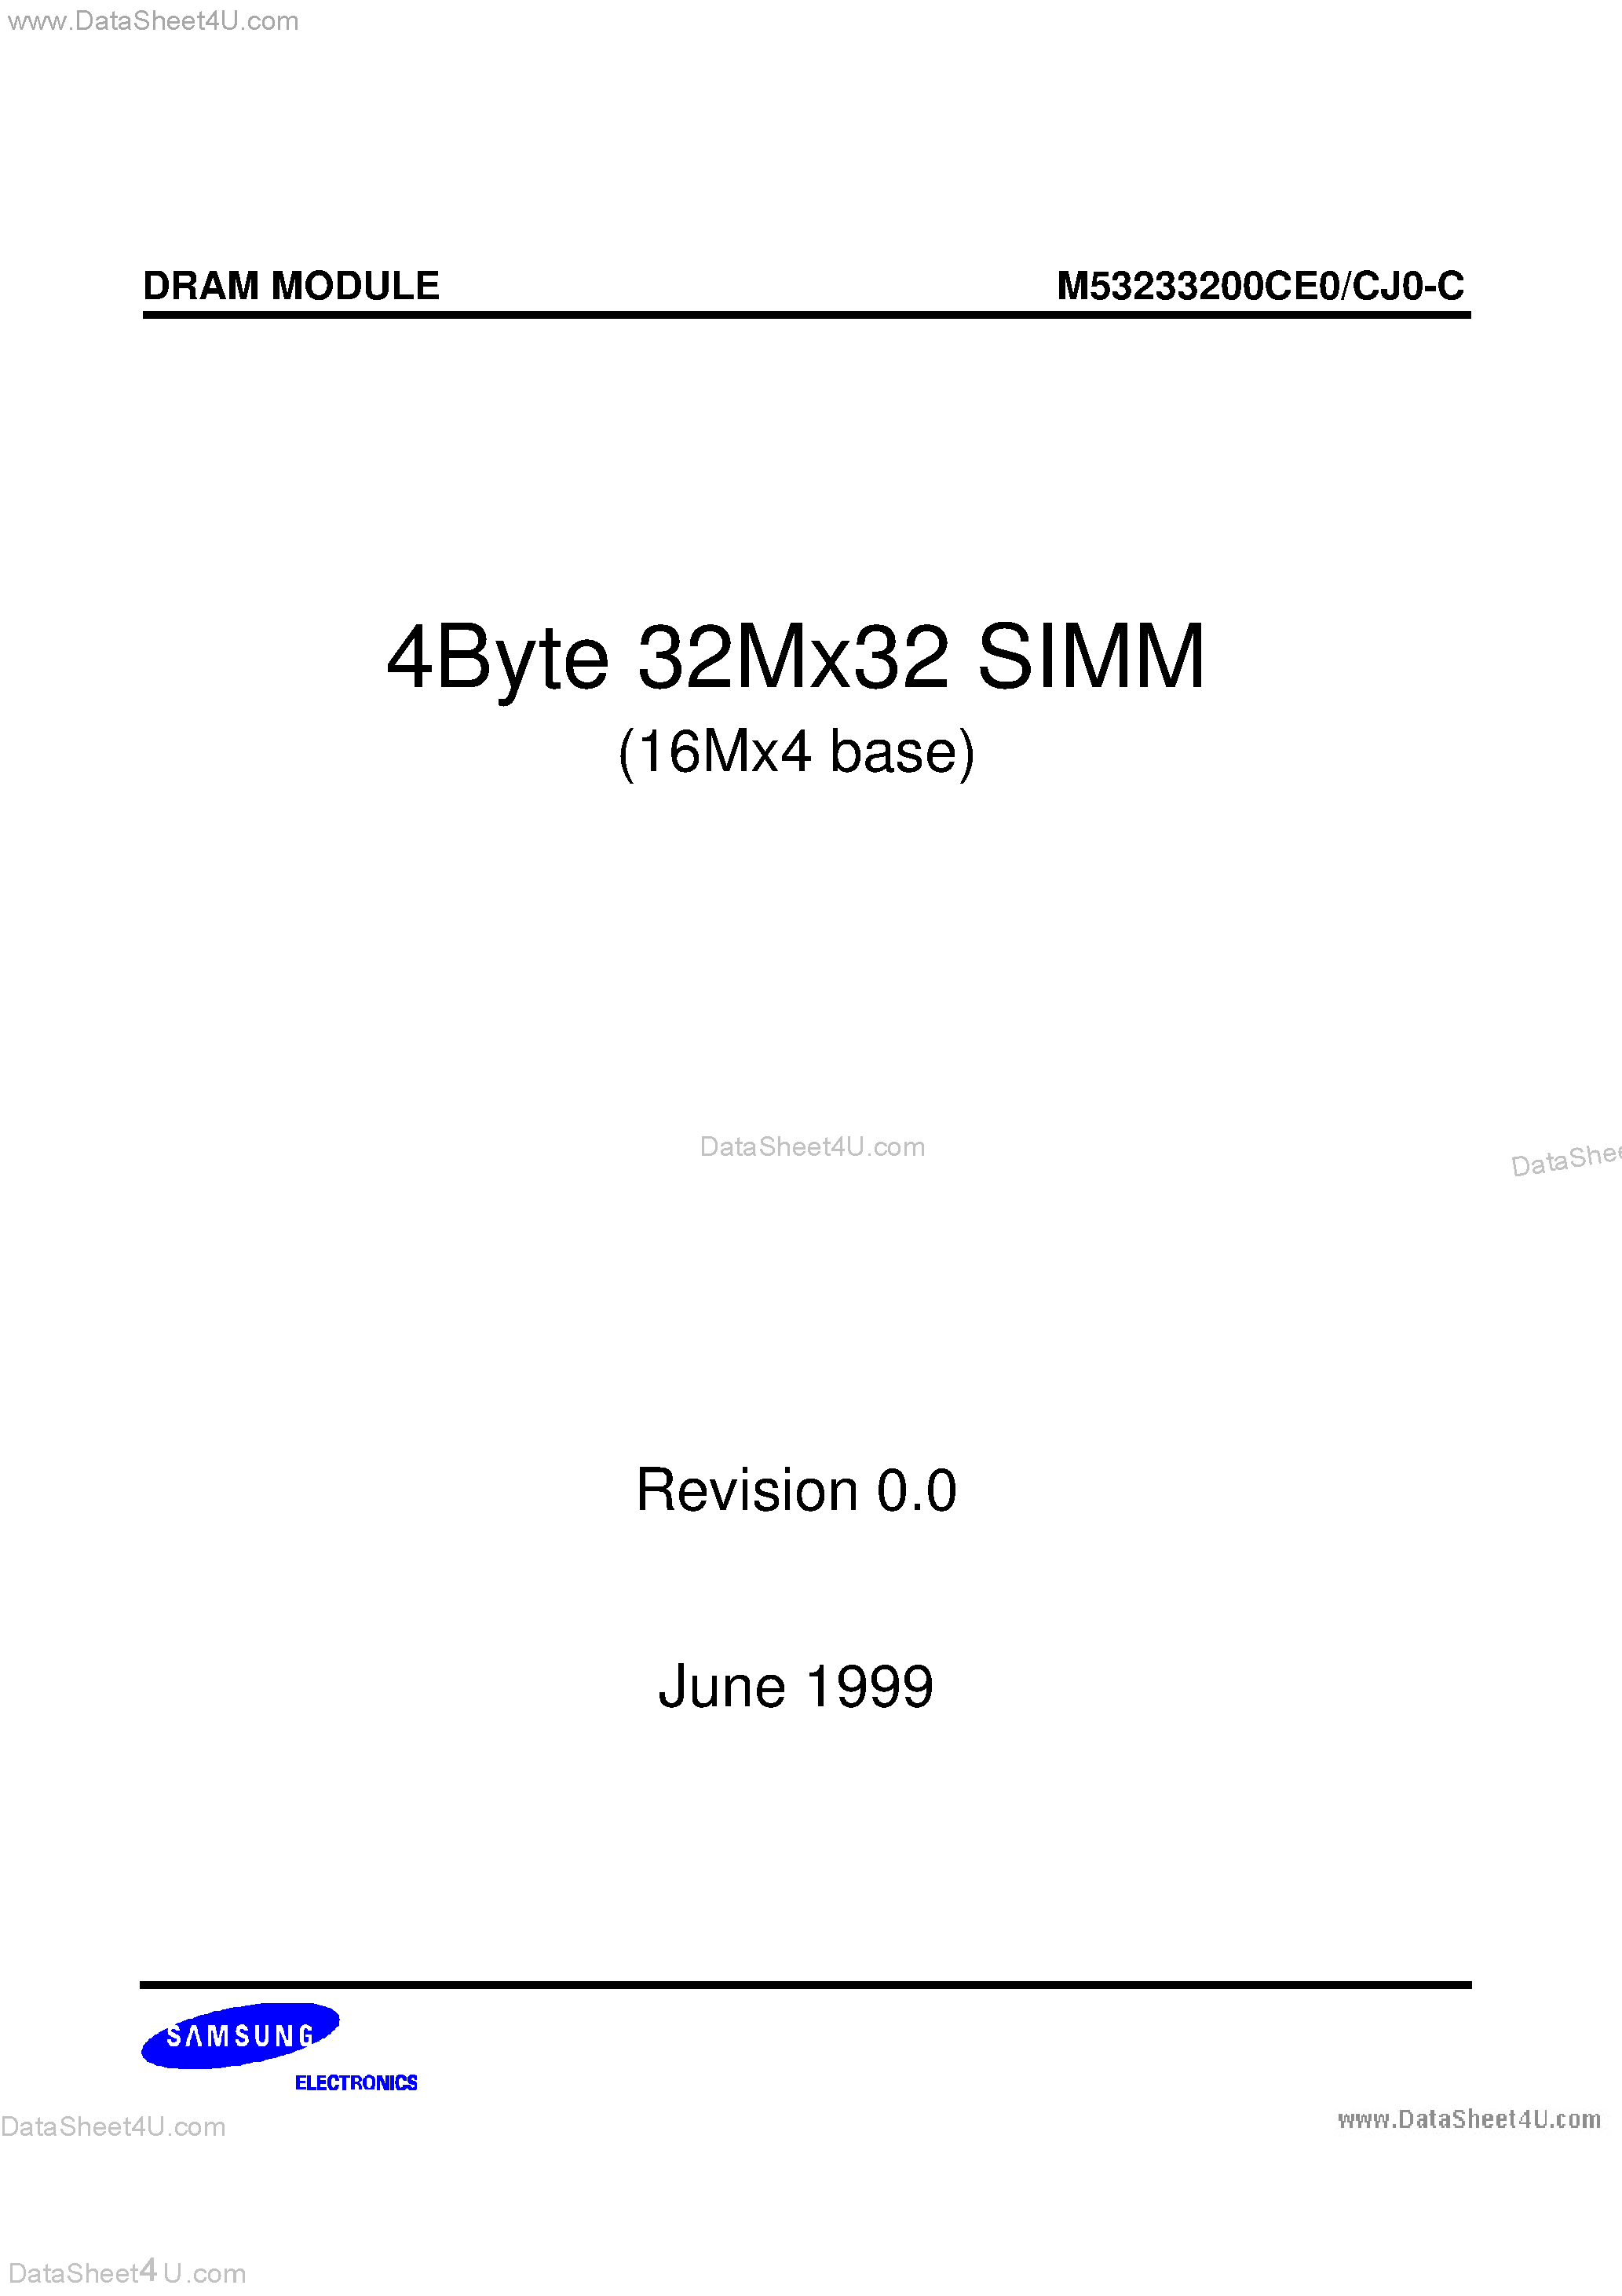 Даташит M53233200CE0 - (M53233200CE0/CJ0-C) DRAM Module страница 1